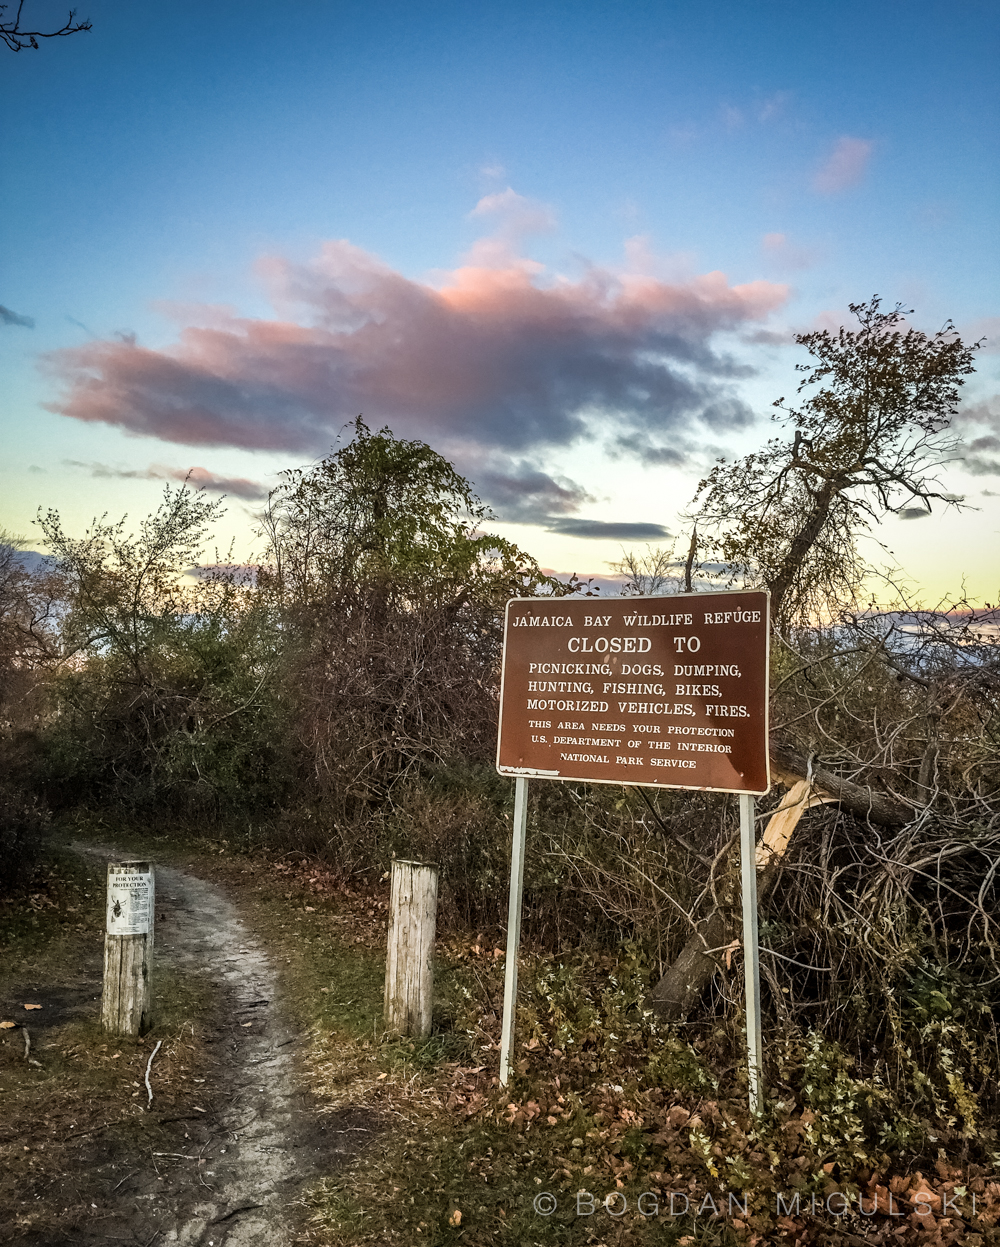 Jamaica Bay Wildlife Refuge sign.